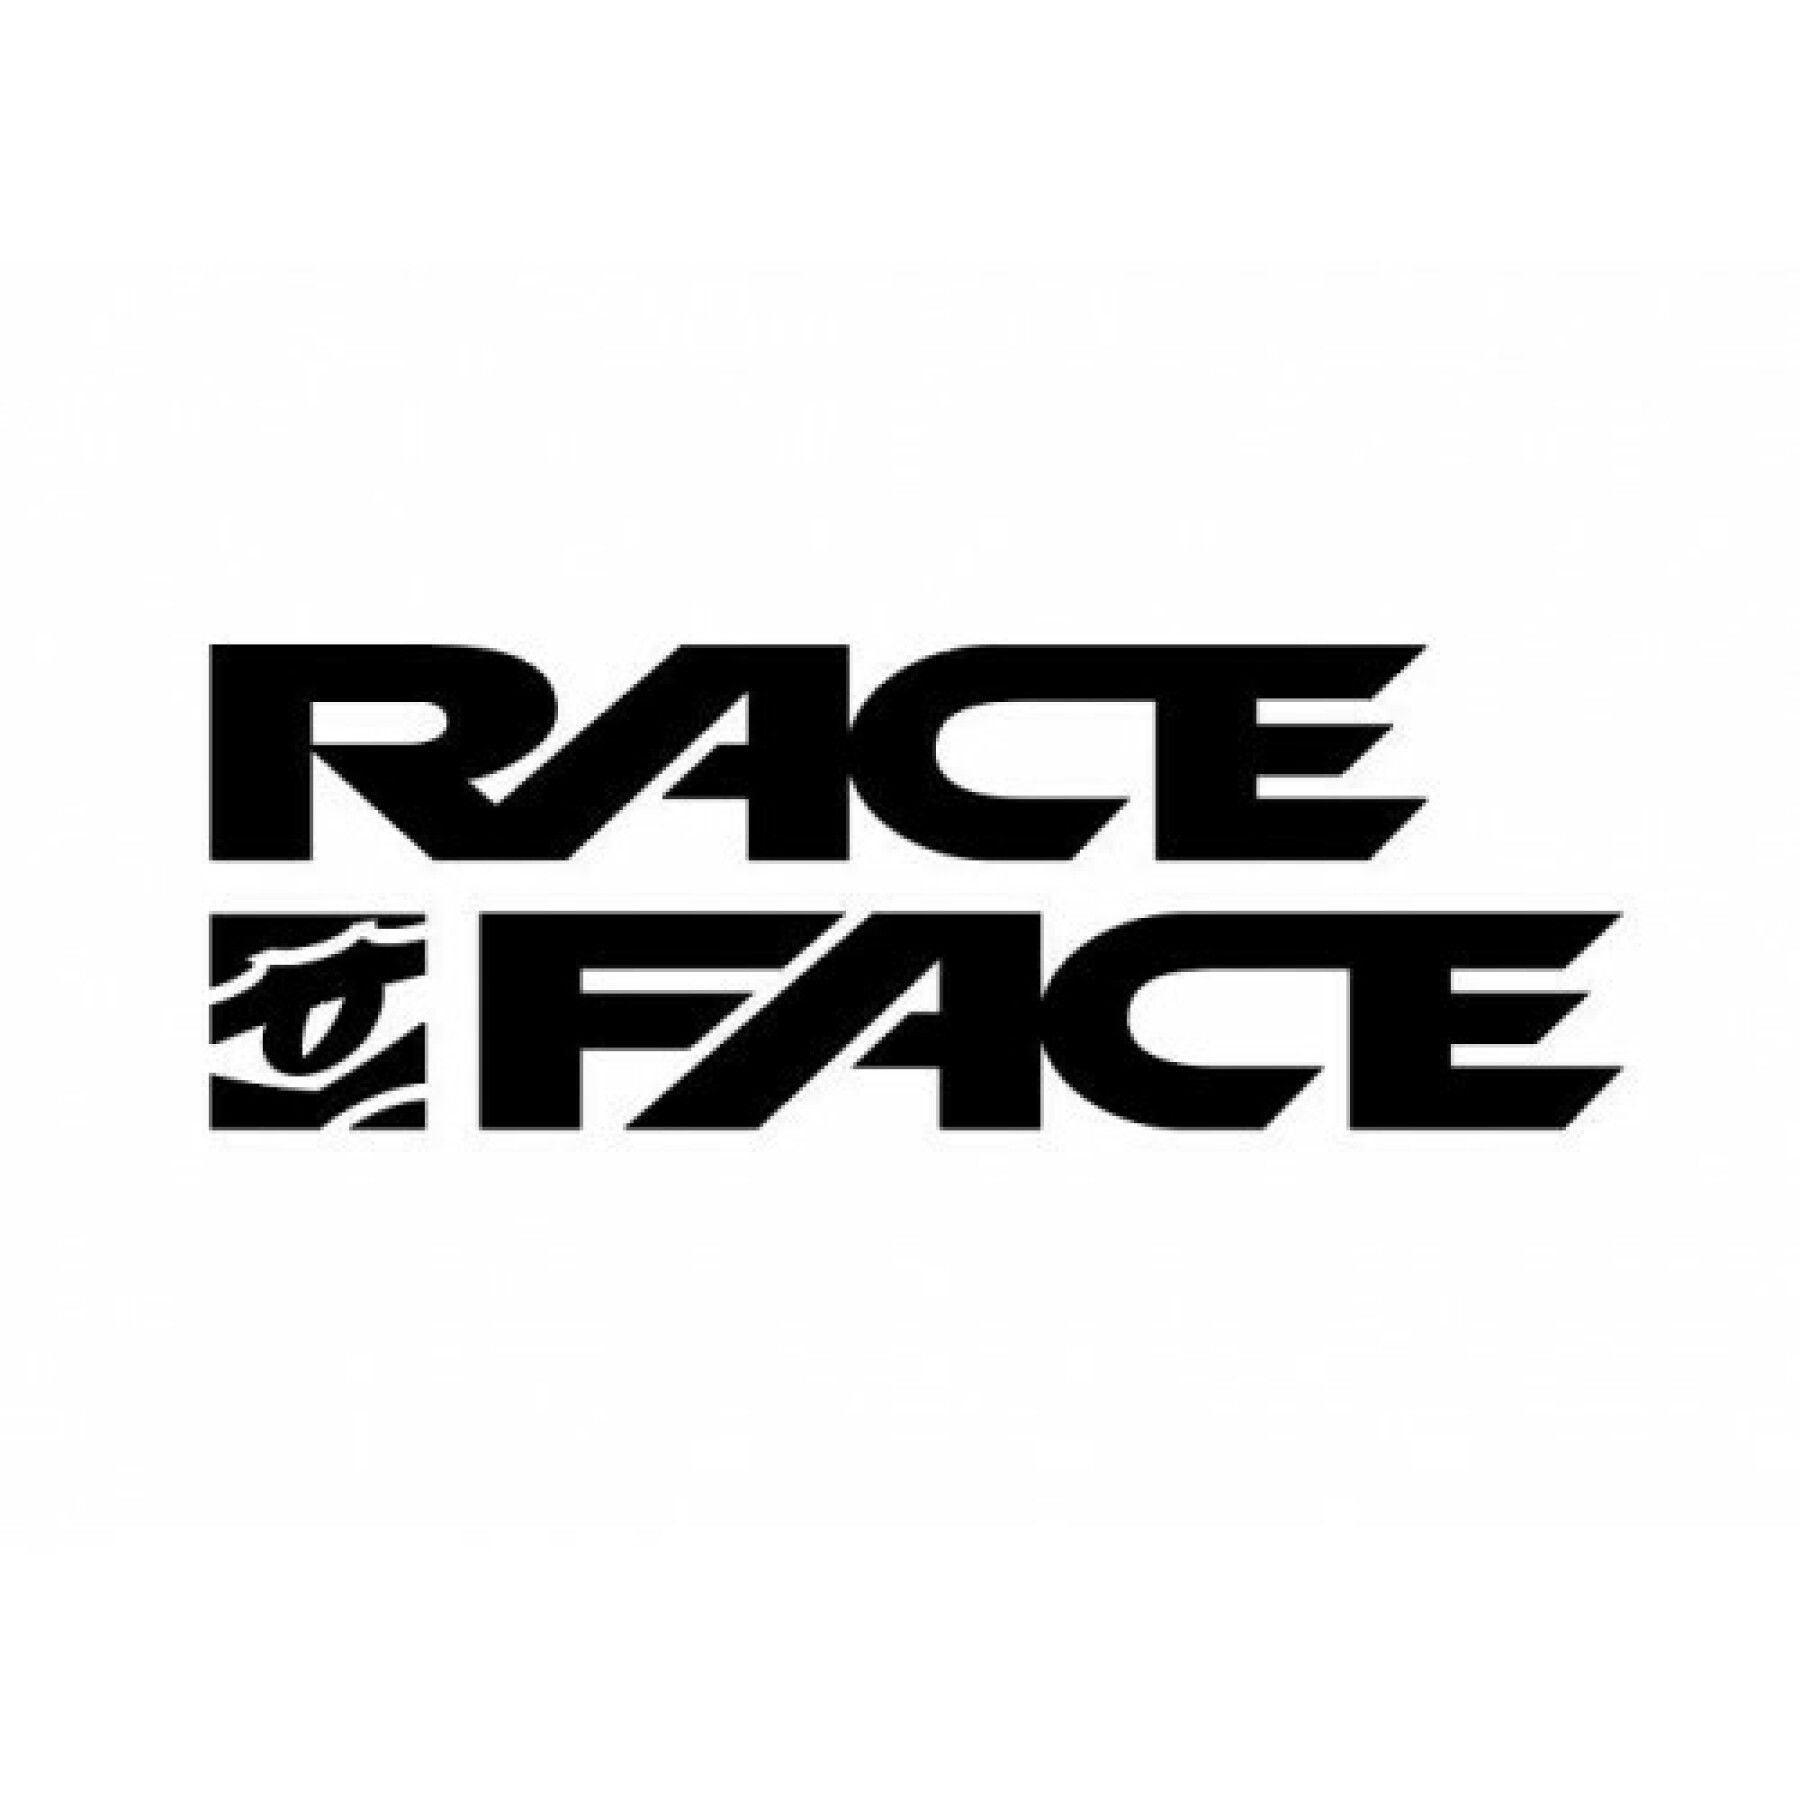 Llanta Race Face arc offset - 35 - 27.5 - 28t